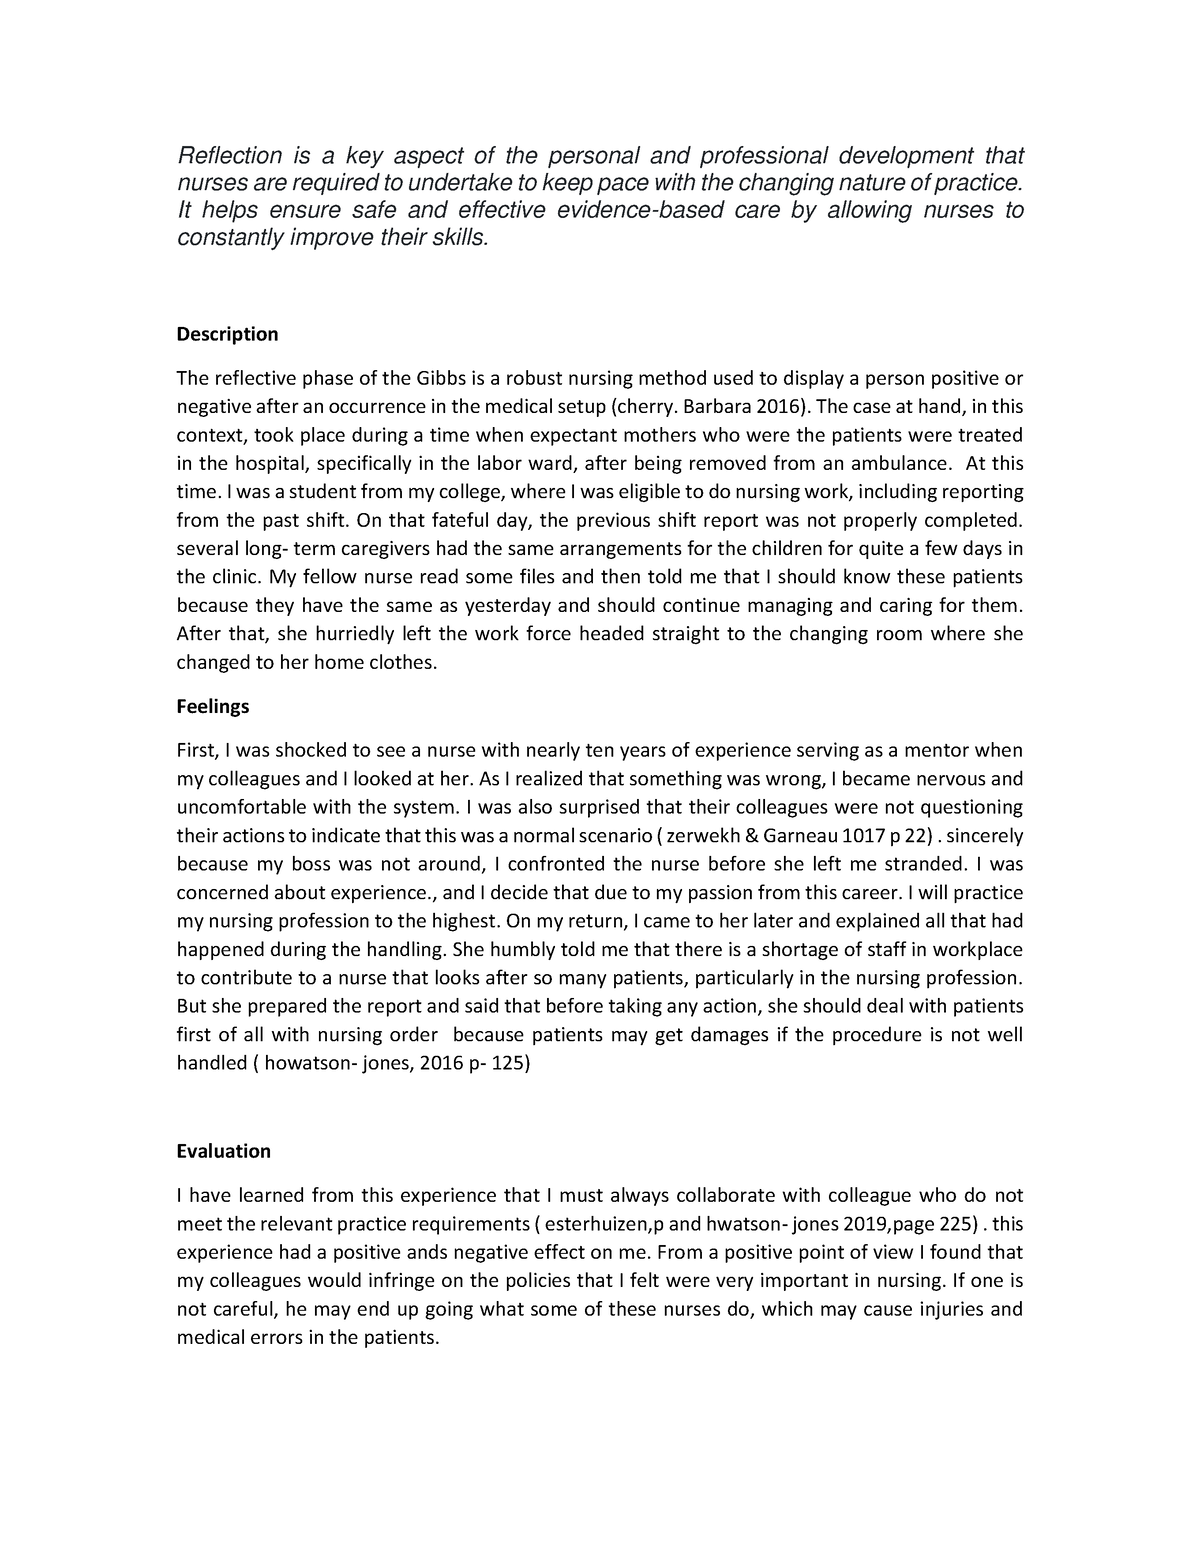 example of a gibbs reflective essay